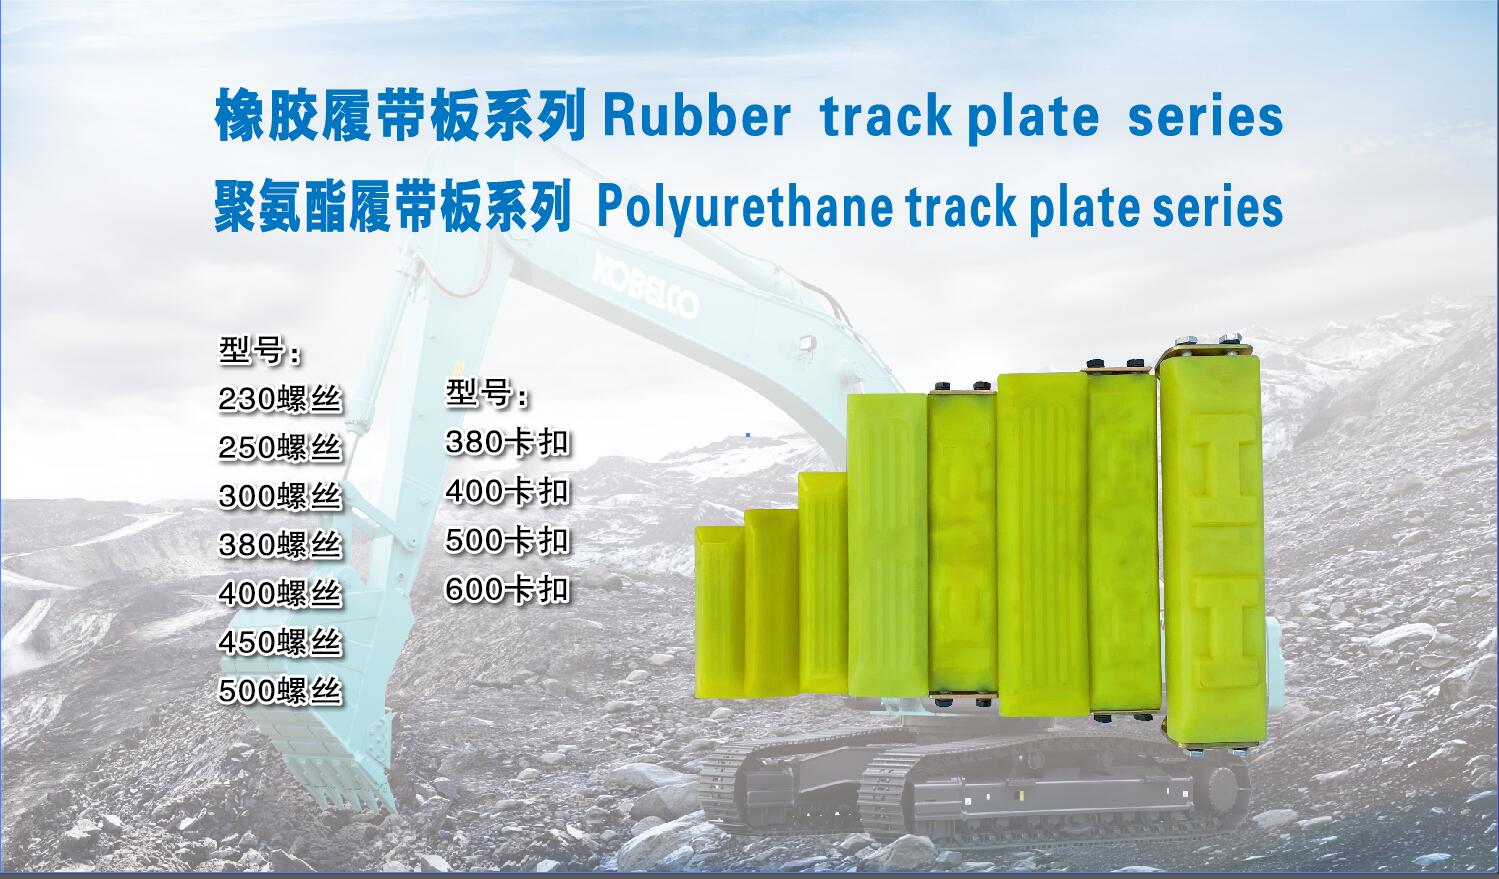 Polyurethane track pads